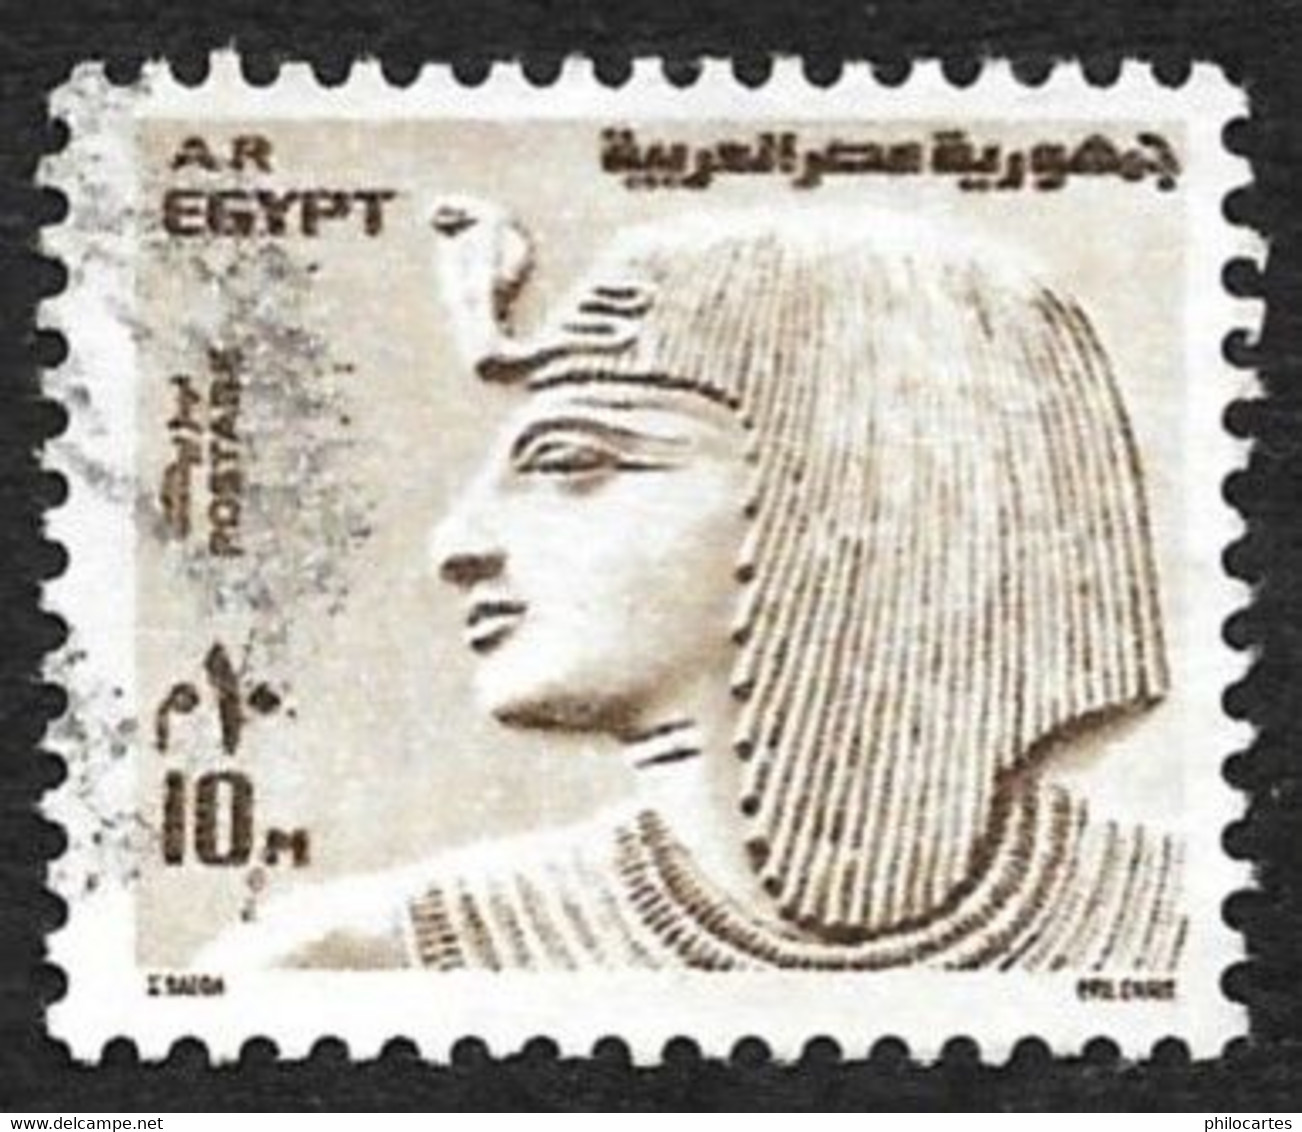 EGYPTE 1973  -  YT 926  -  Sethi 1°   - Oblitéré - Used Stamps